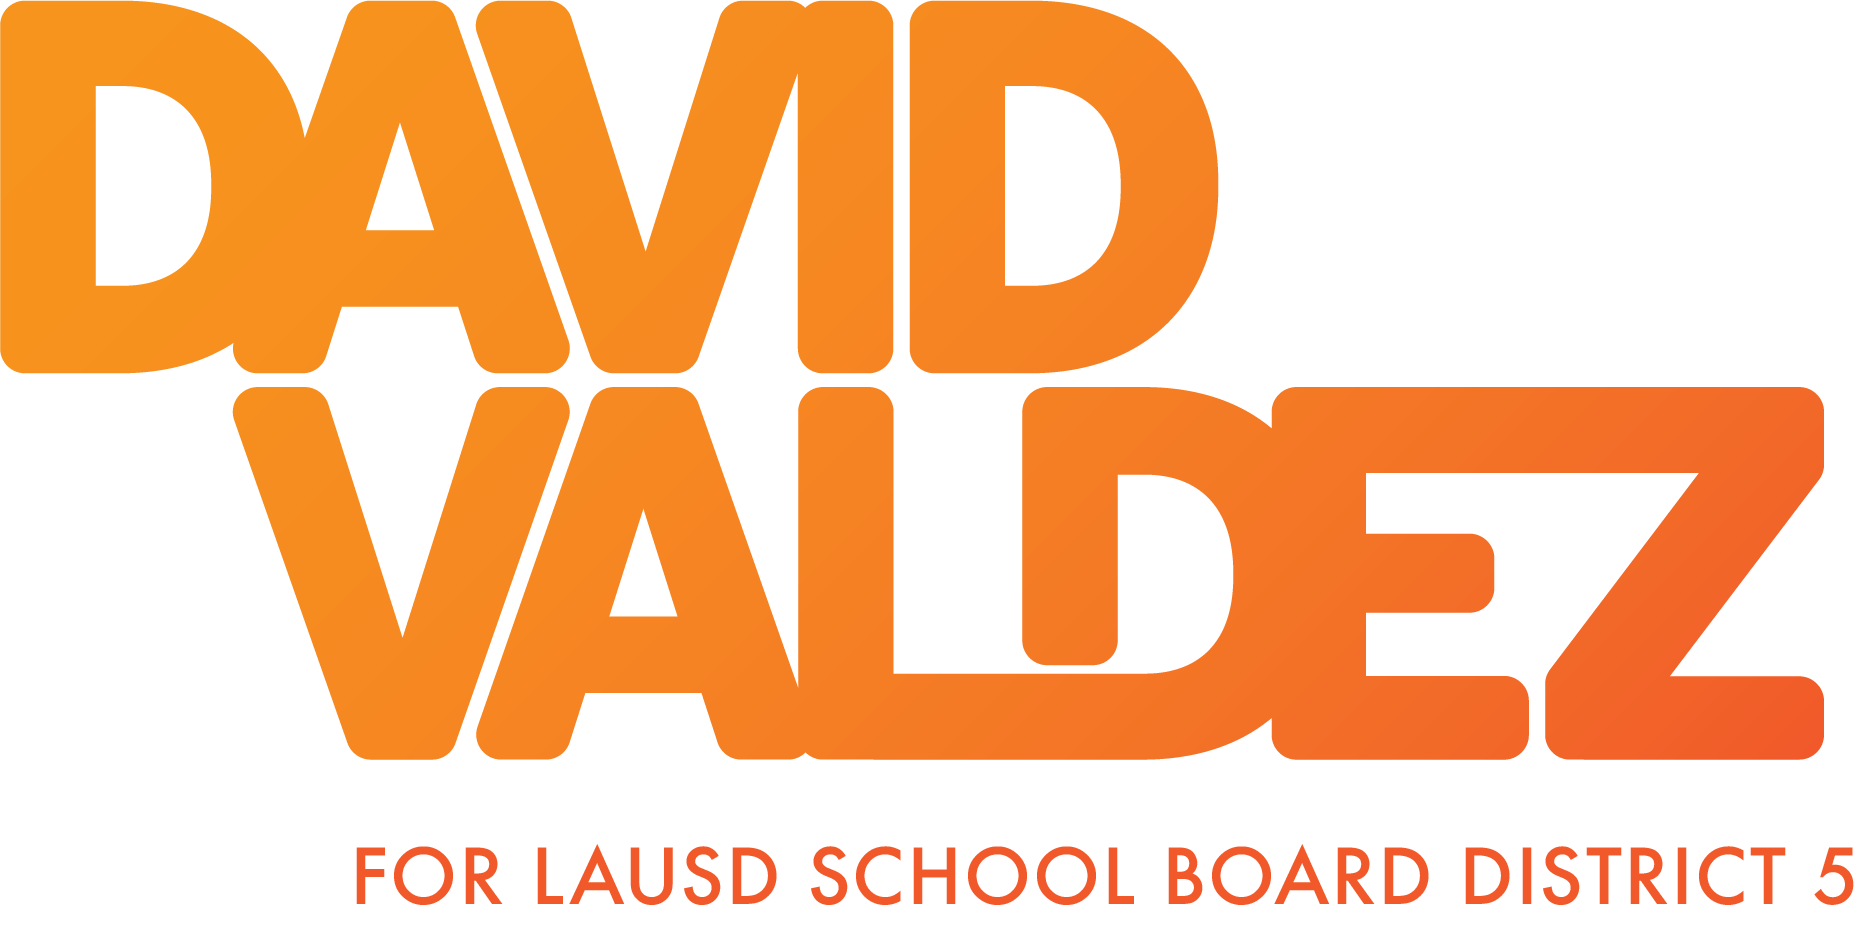 LAUSD Logo - Home - David Valdez for LAUSD